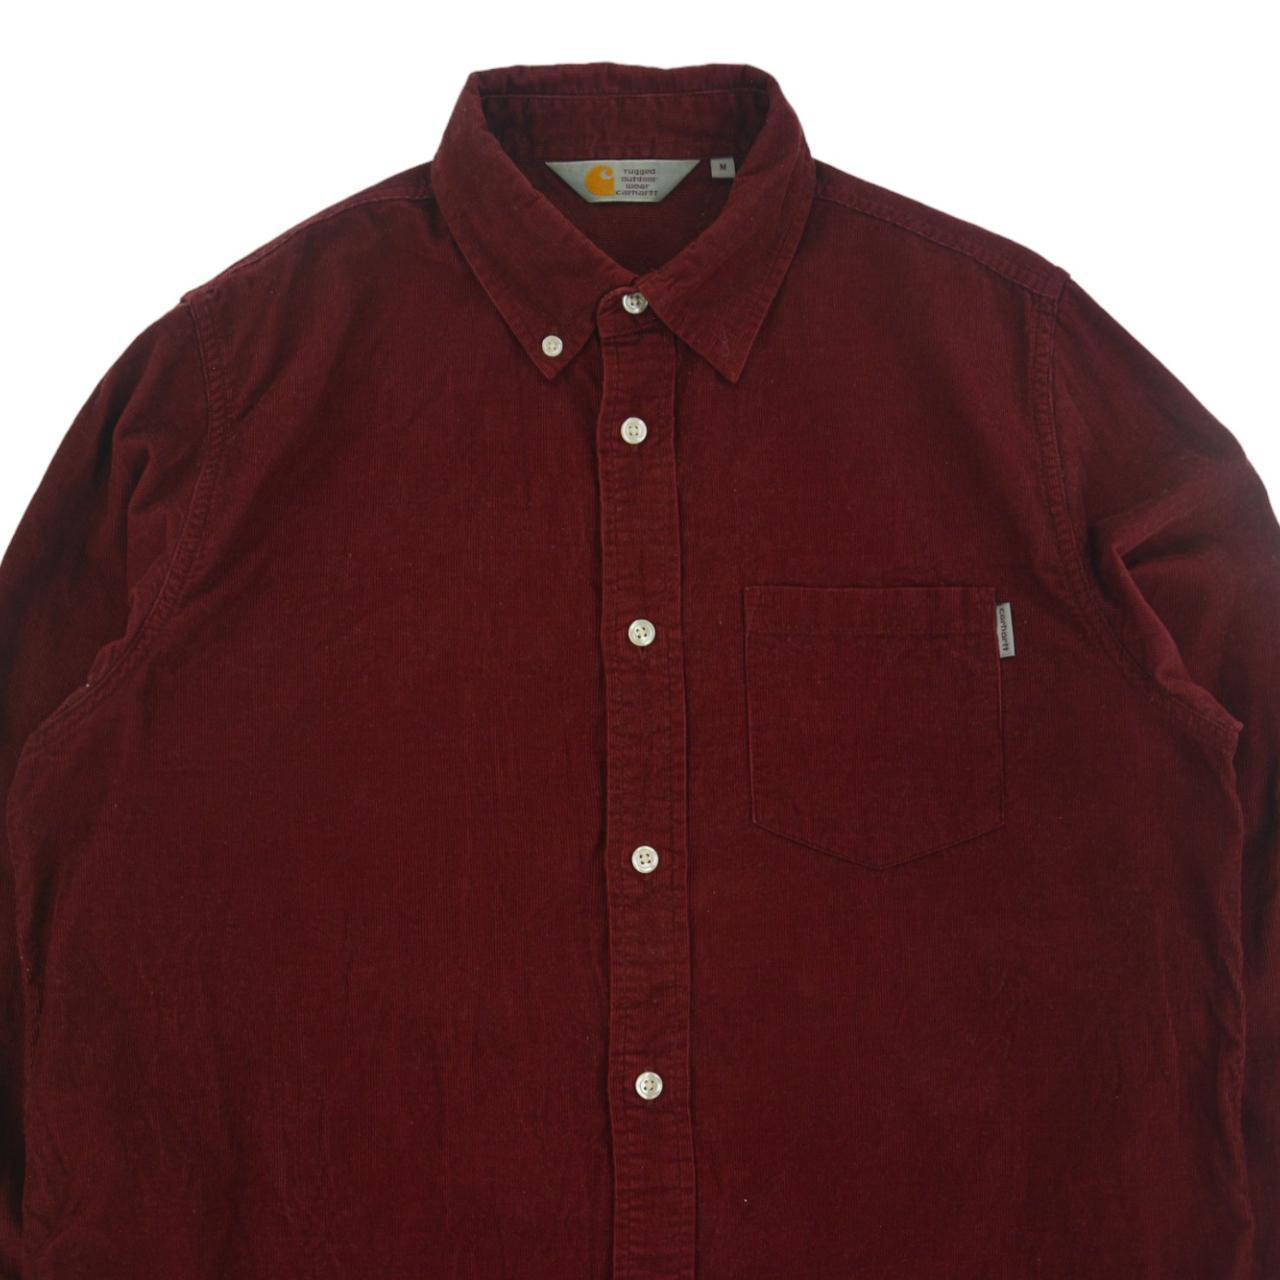 Vintage Carhartt Corduroy Shirt Size M - Known Source